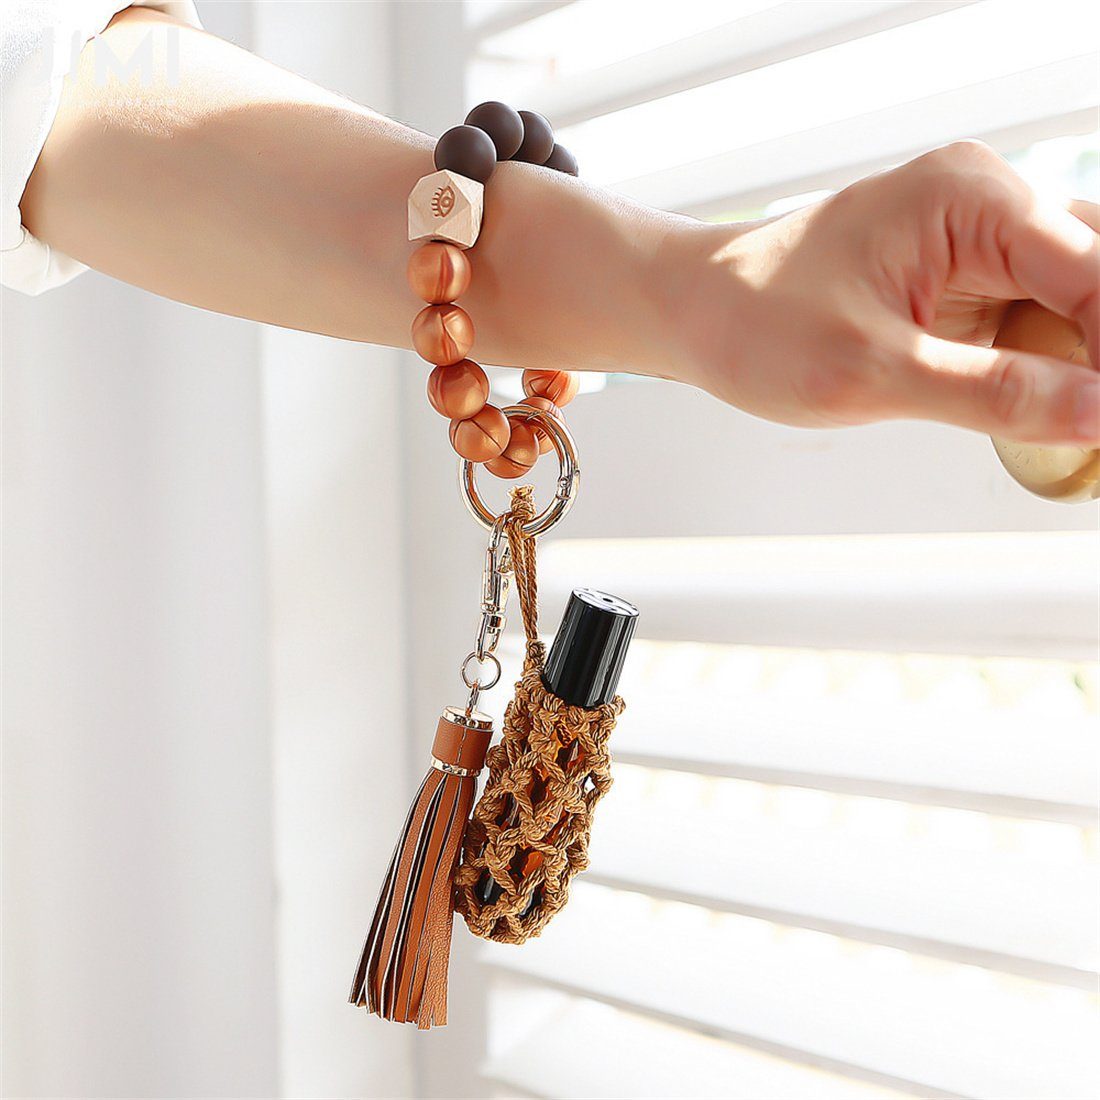 DÖRÖY Schlüsselanhänger 3-teiliger Perlenquasten-Armband Silikon-Schlüsselanhänger mit